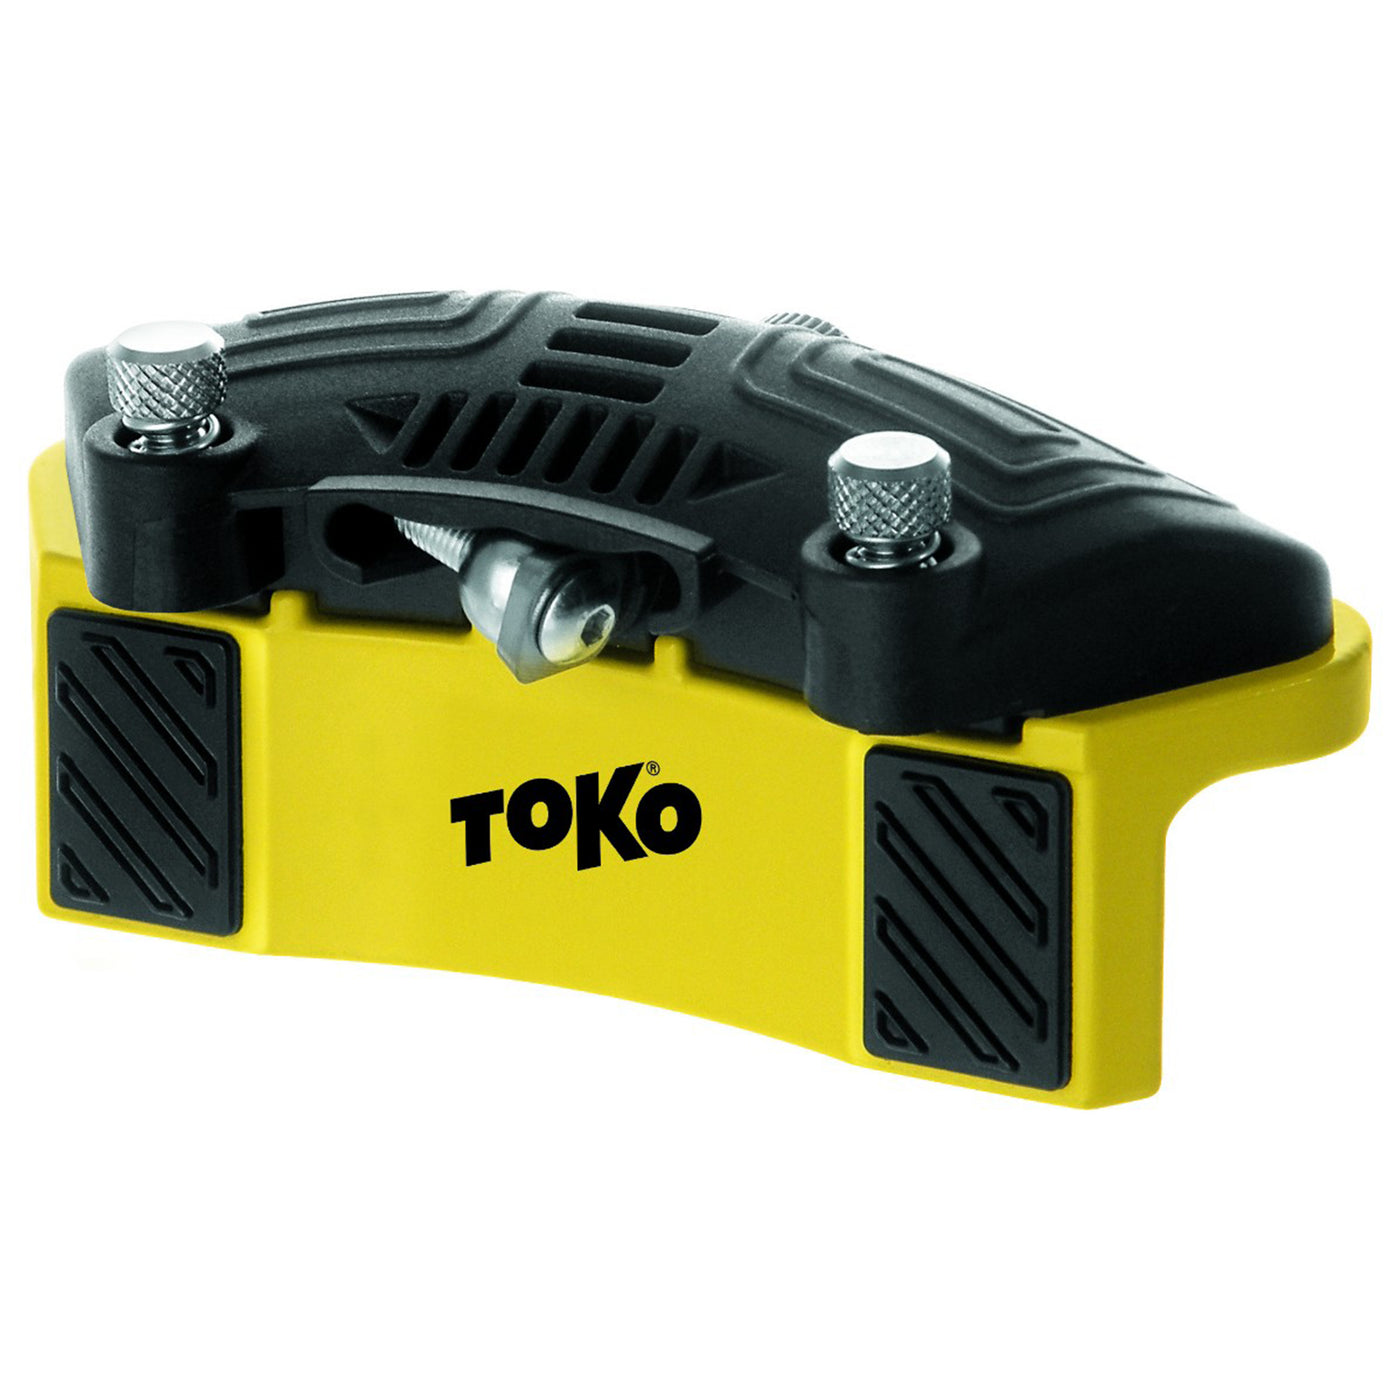 Toko Sidewall Planer Pro EDGE TOOLS Toko   